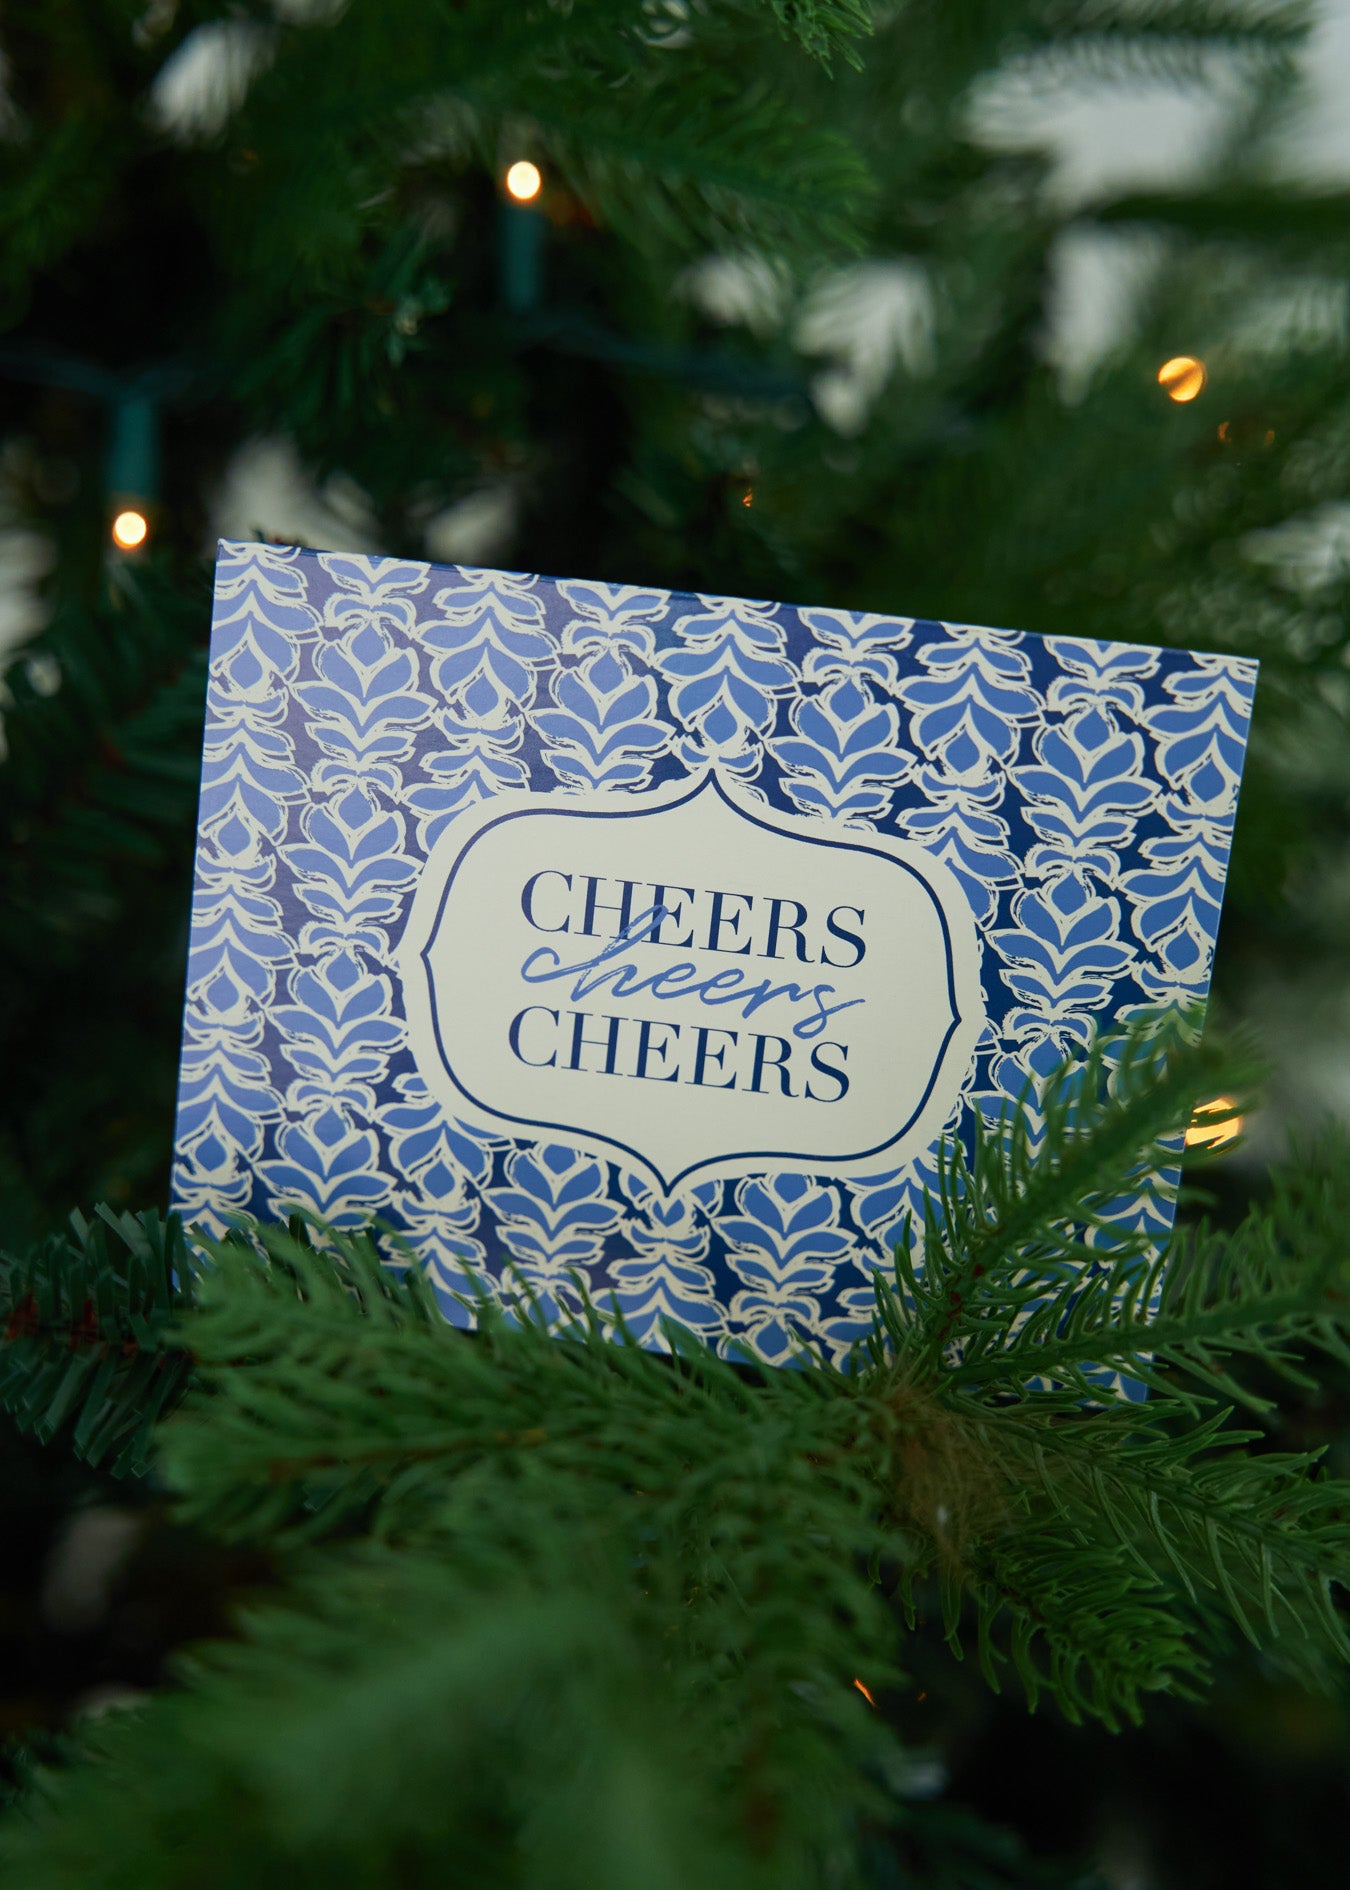 Cheers Cheers Cheers Card on Christmas Tree